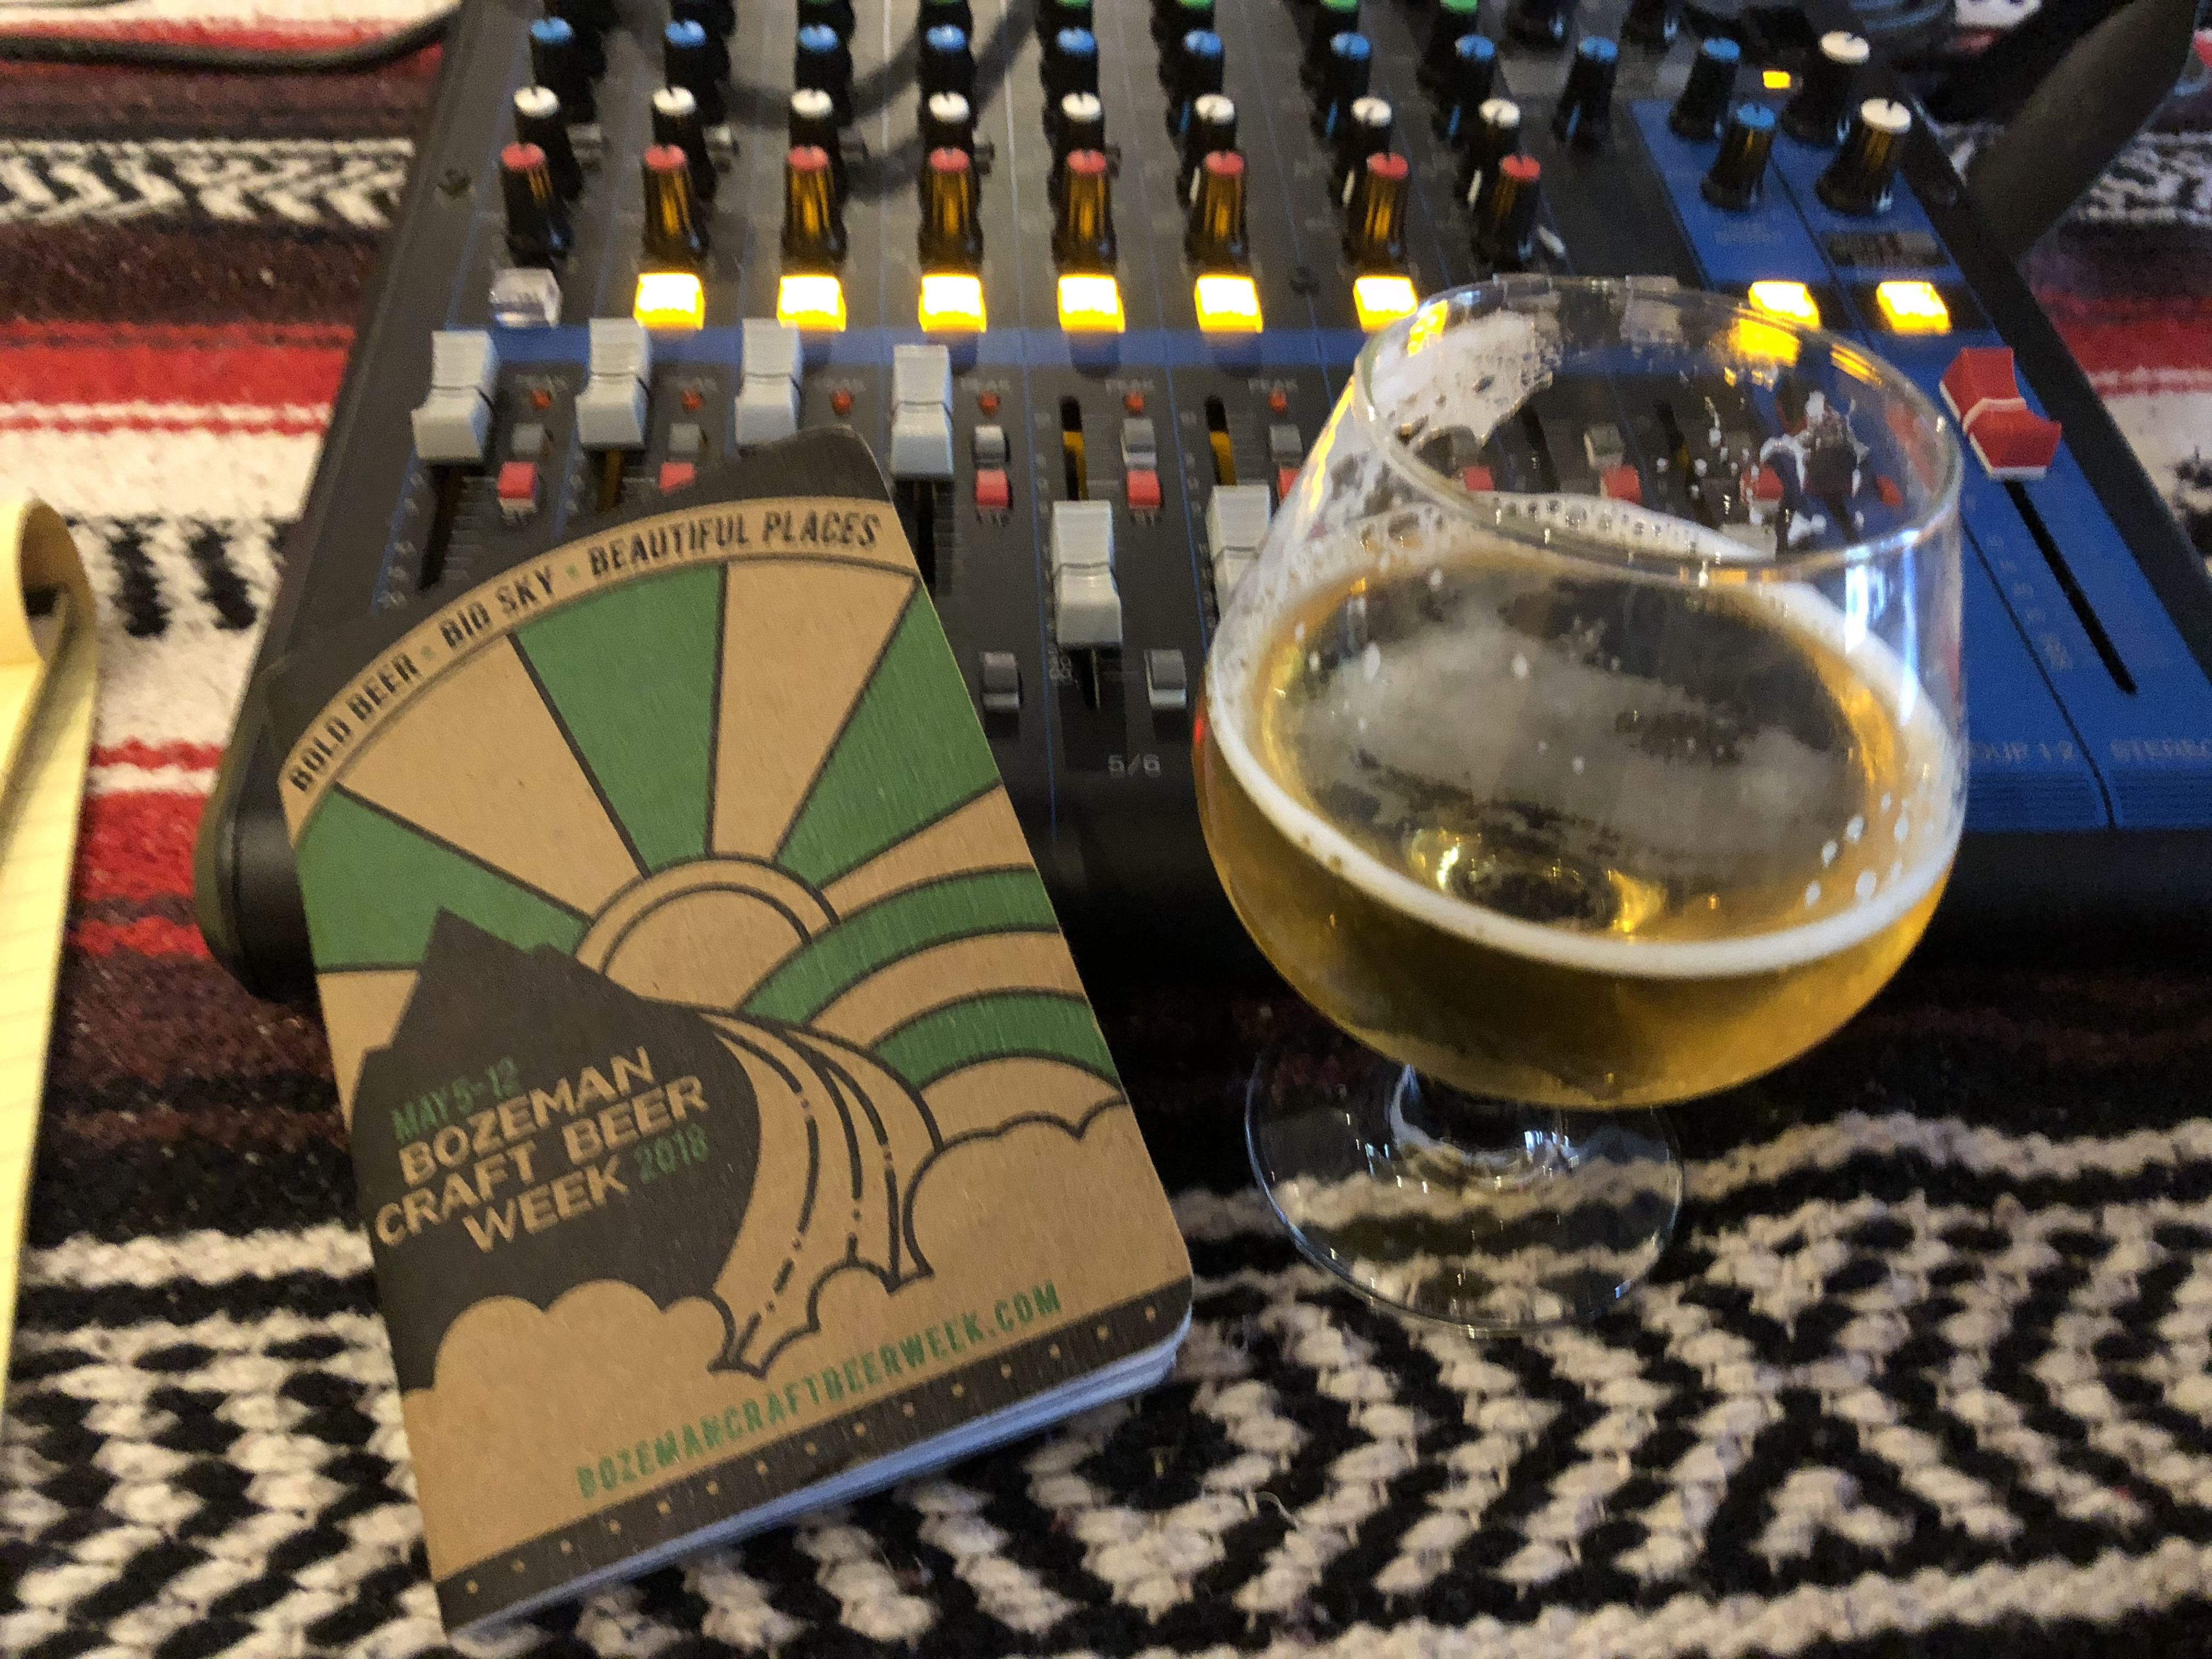  Jesse Bussard and Loy Maierhauser Co-founders of Bozeman Craft Beer Week - Portland Beer Podcast episode 82